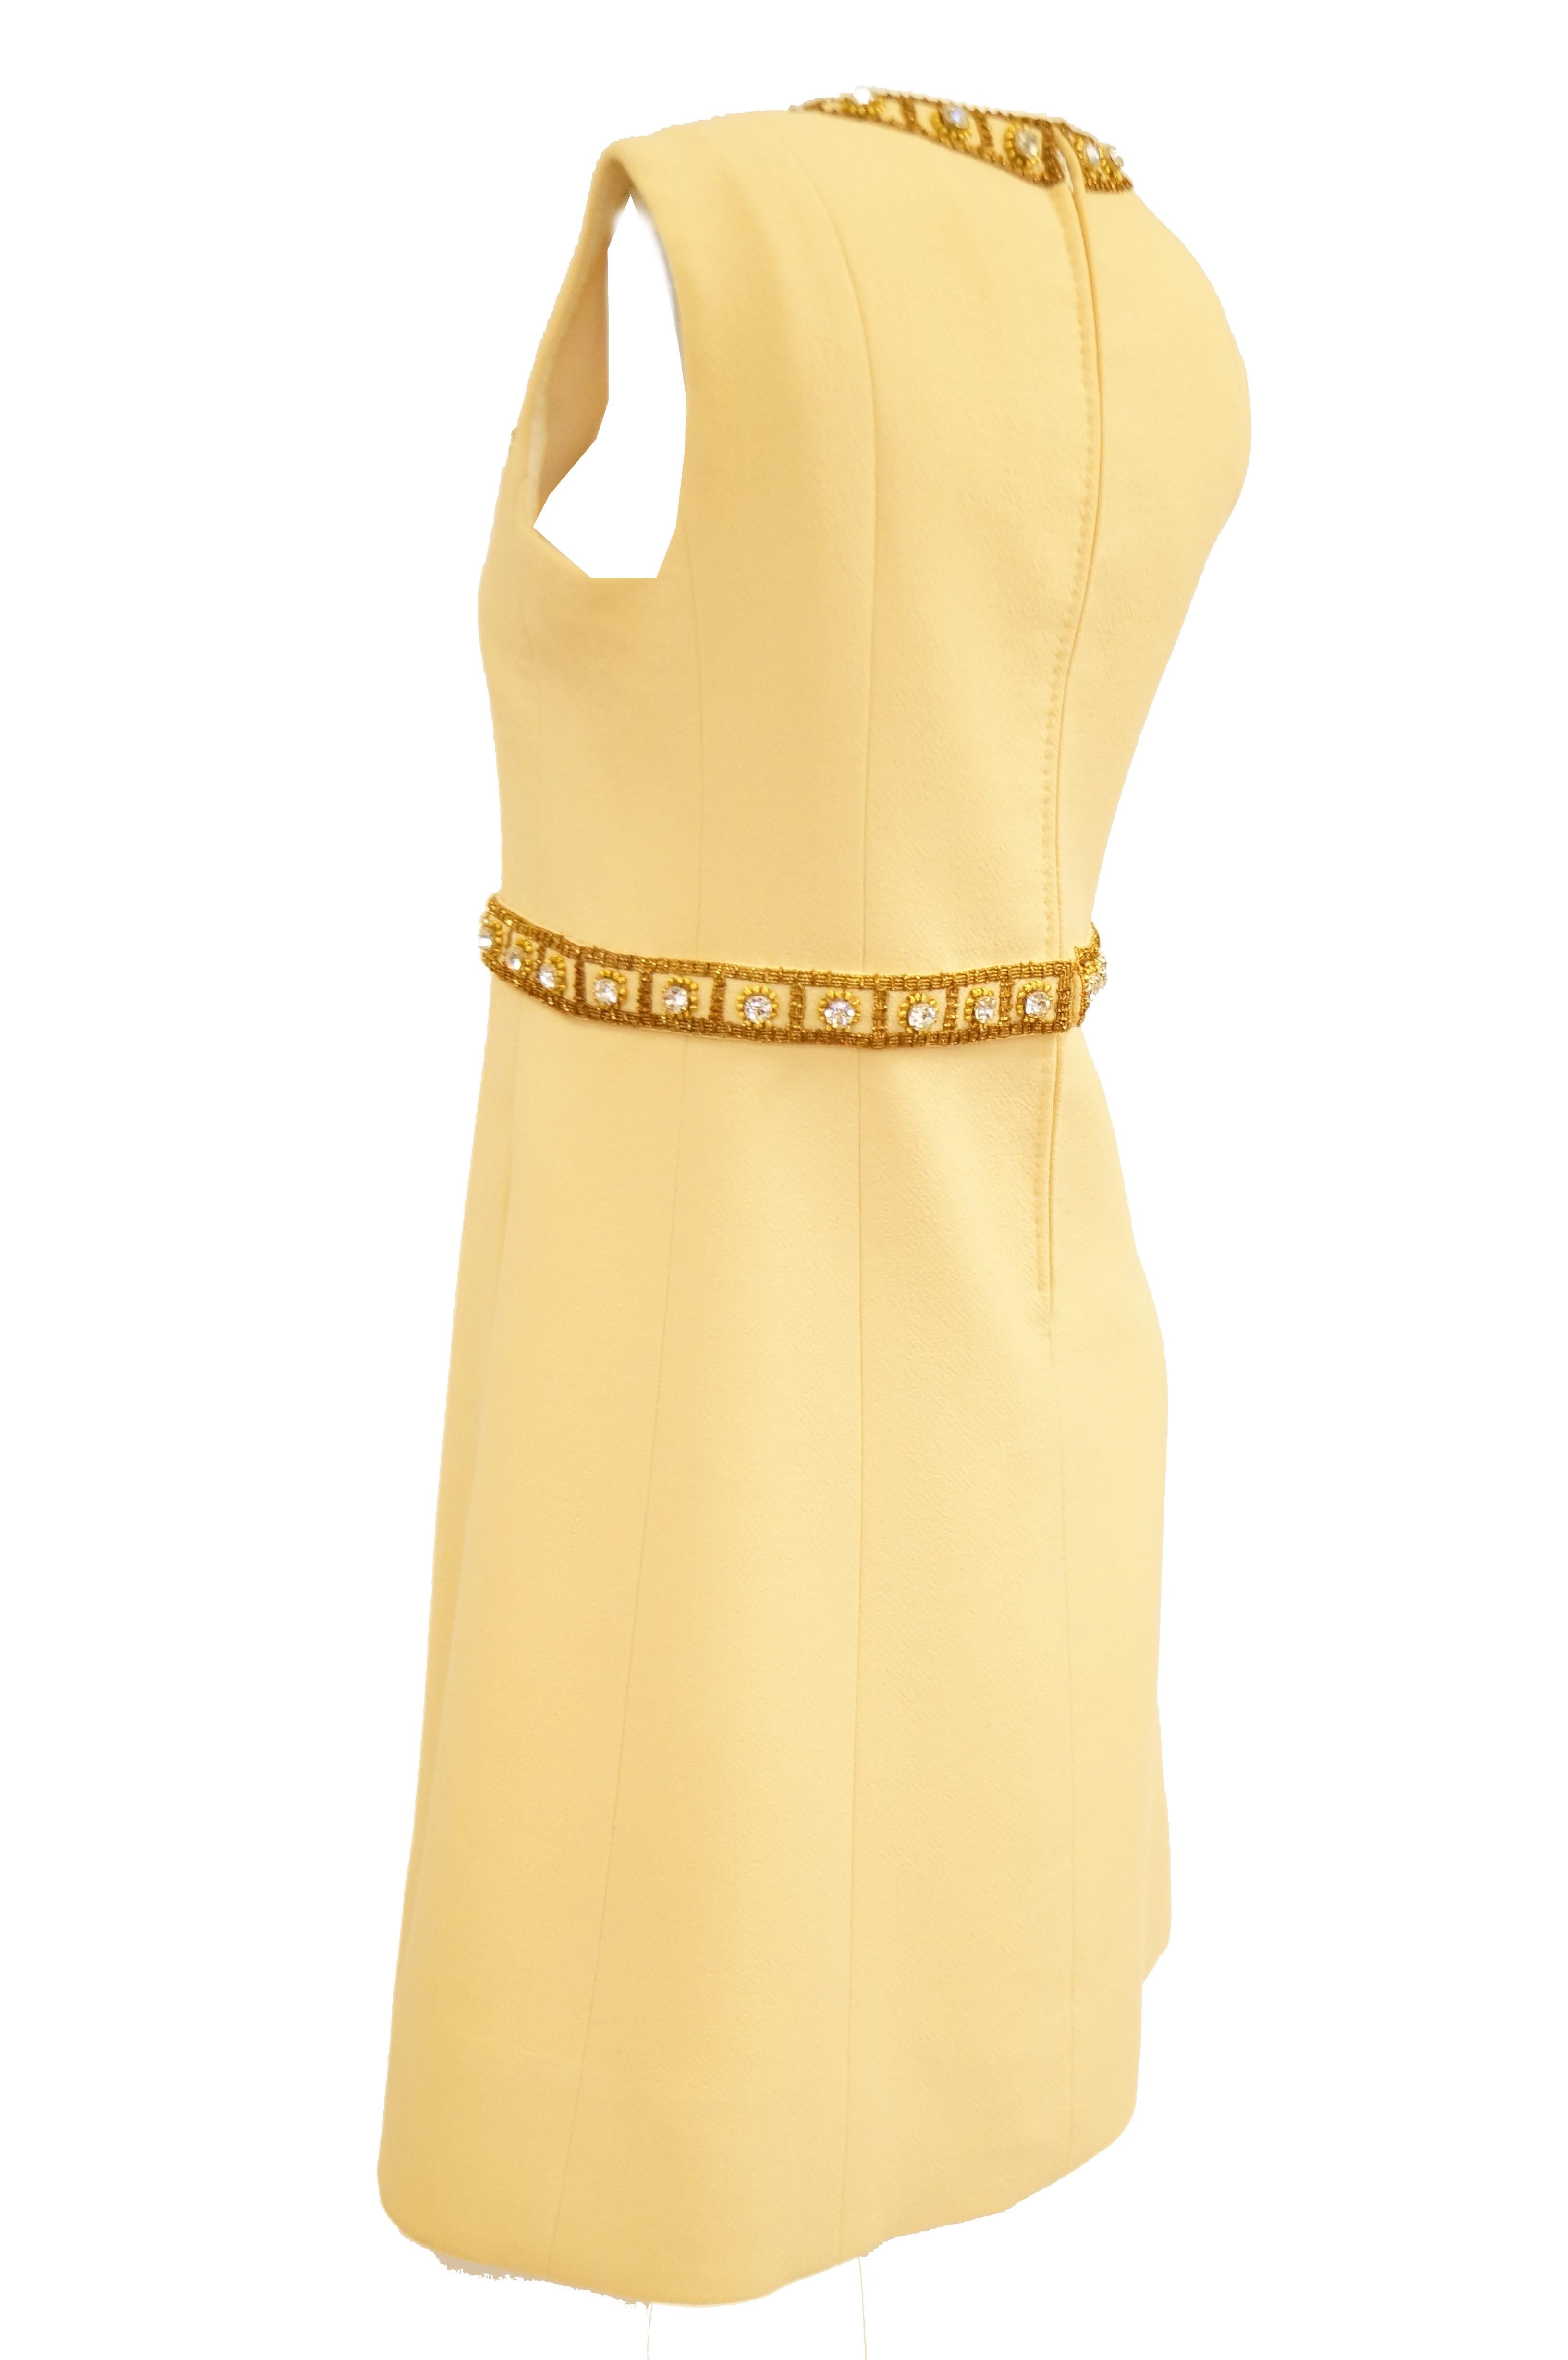 Women's 1960s Couture Cardinali Mod Shift Dress W/ Rhinestones & Gold Passementerie For Sale